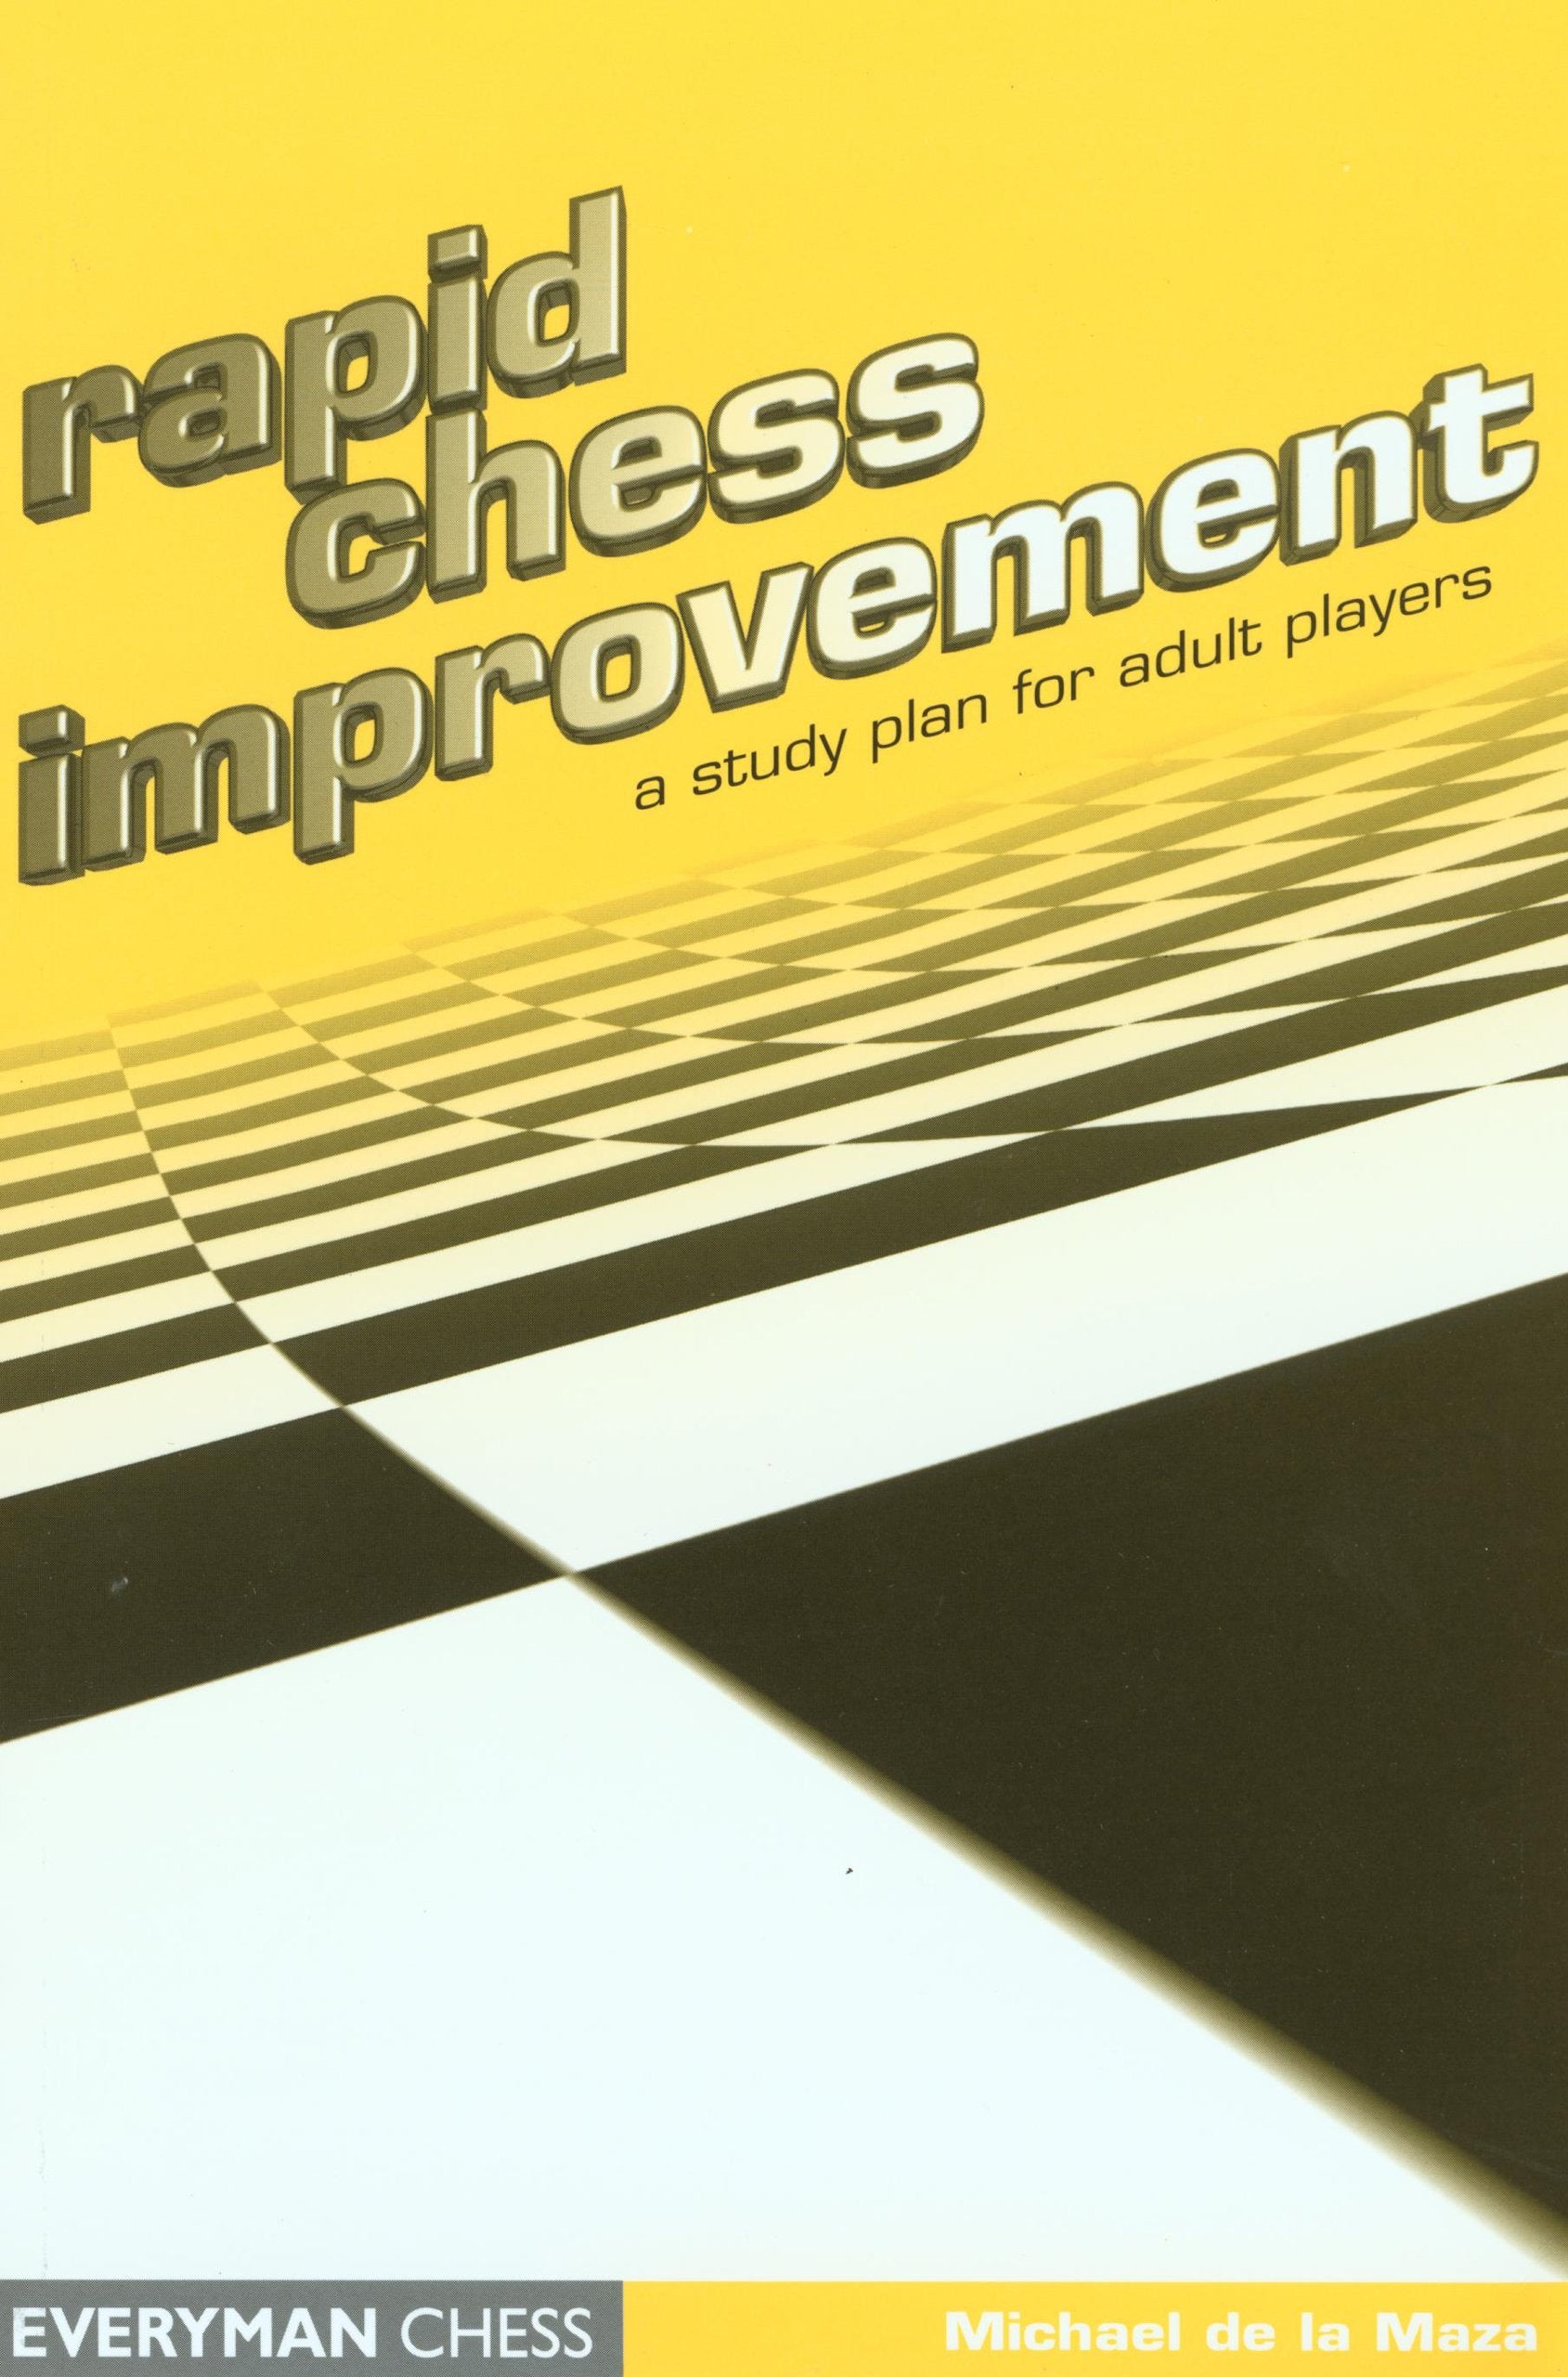 My Chess.com Chess Improvement Plan